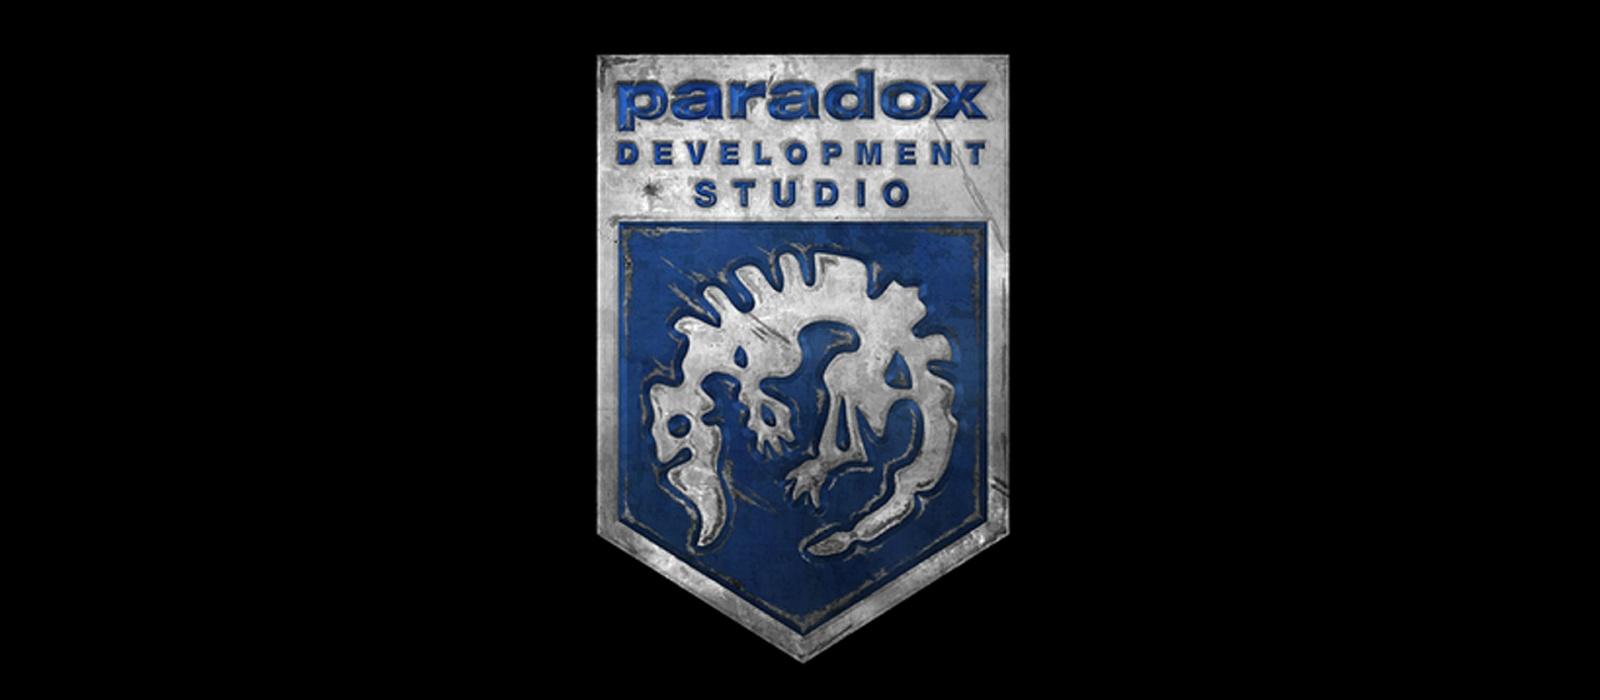  Paradox Development Studio